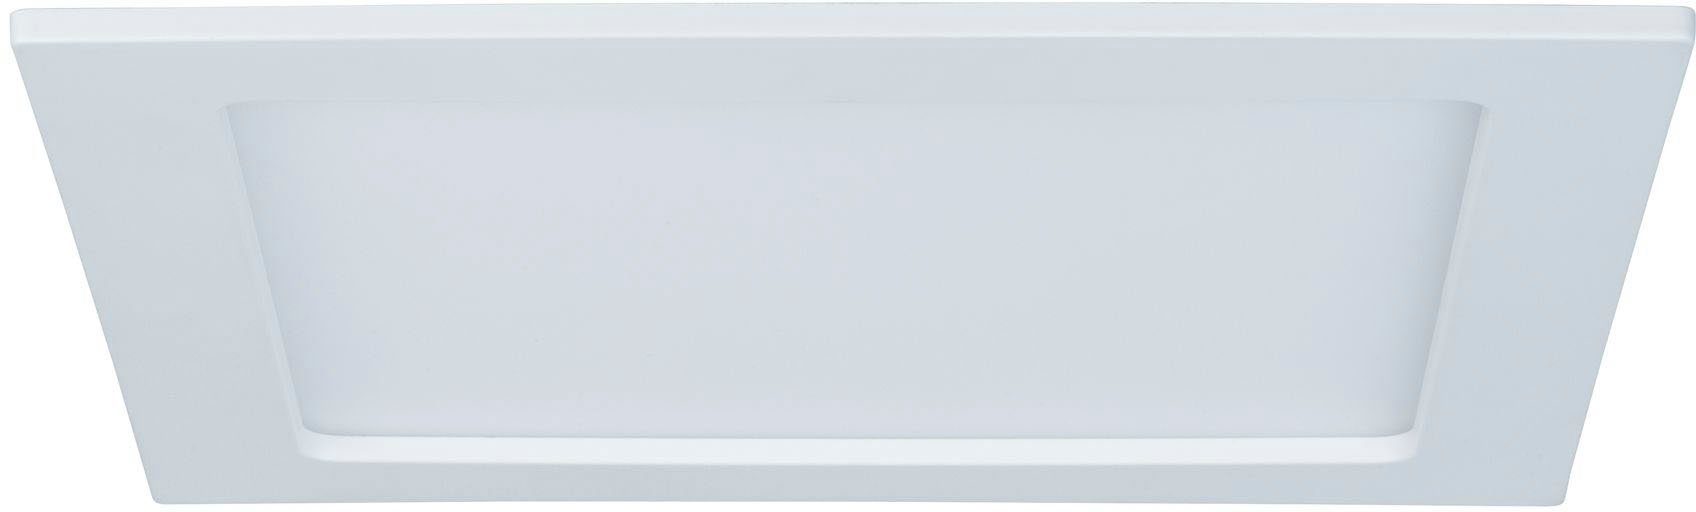 Weiß LED LED integriert, fest Panel Neutralweiß, Paulmann Deckenleuchte, eckig Badleuchte 9W spritzwassergeschützt IP44 Dimmbar